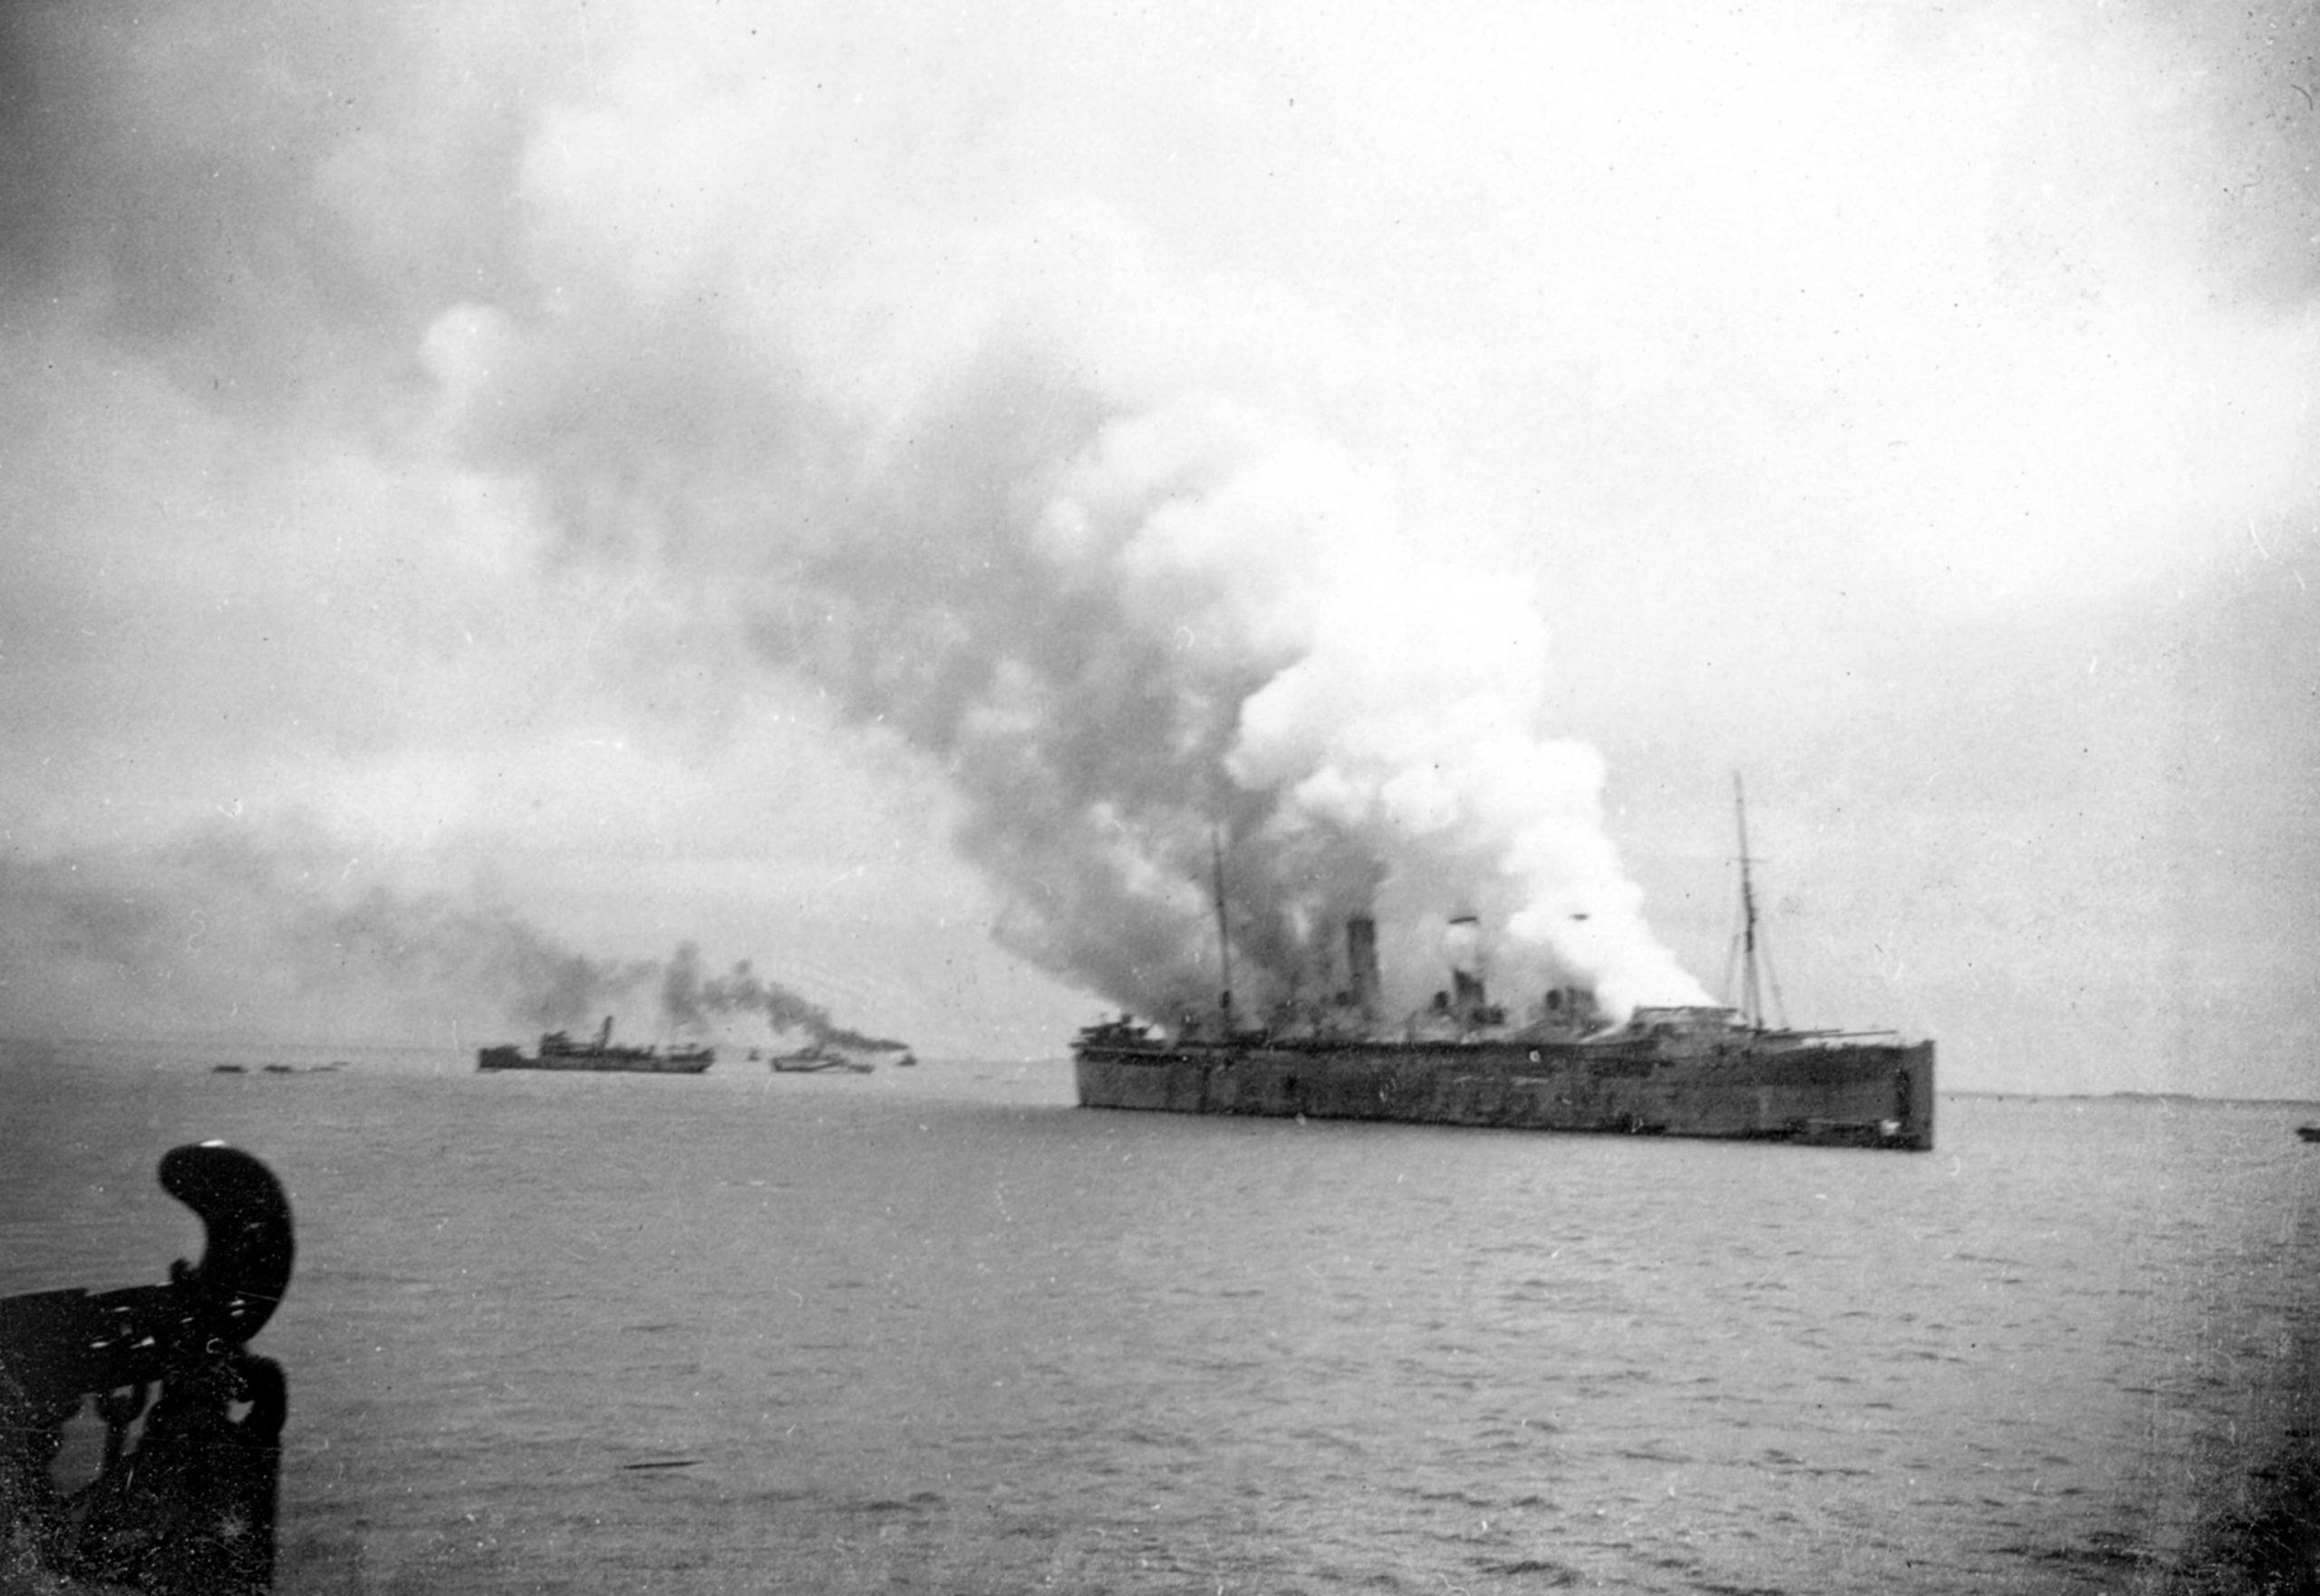 Burning British "Empress of Asia" sea liner